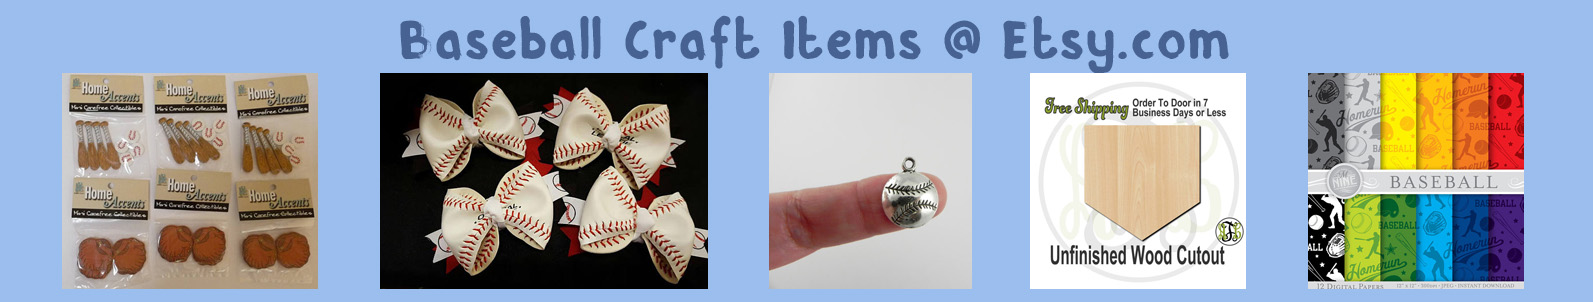 etsy baseball crafts items banner blue